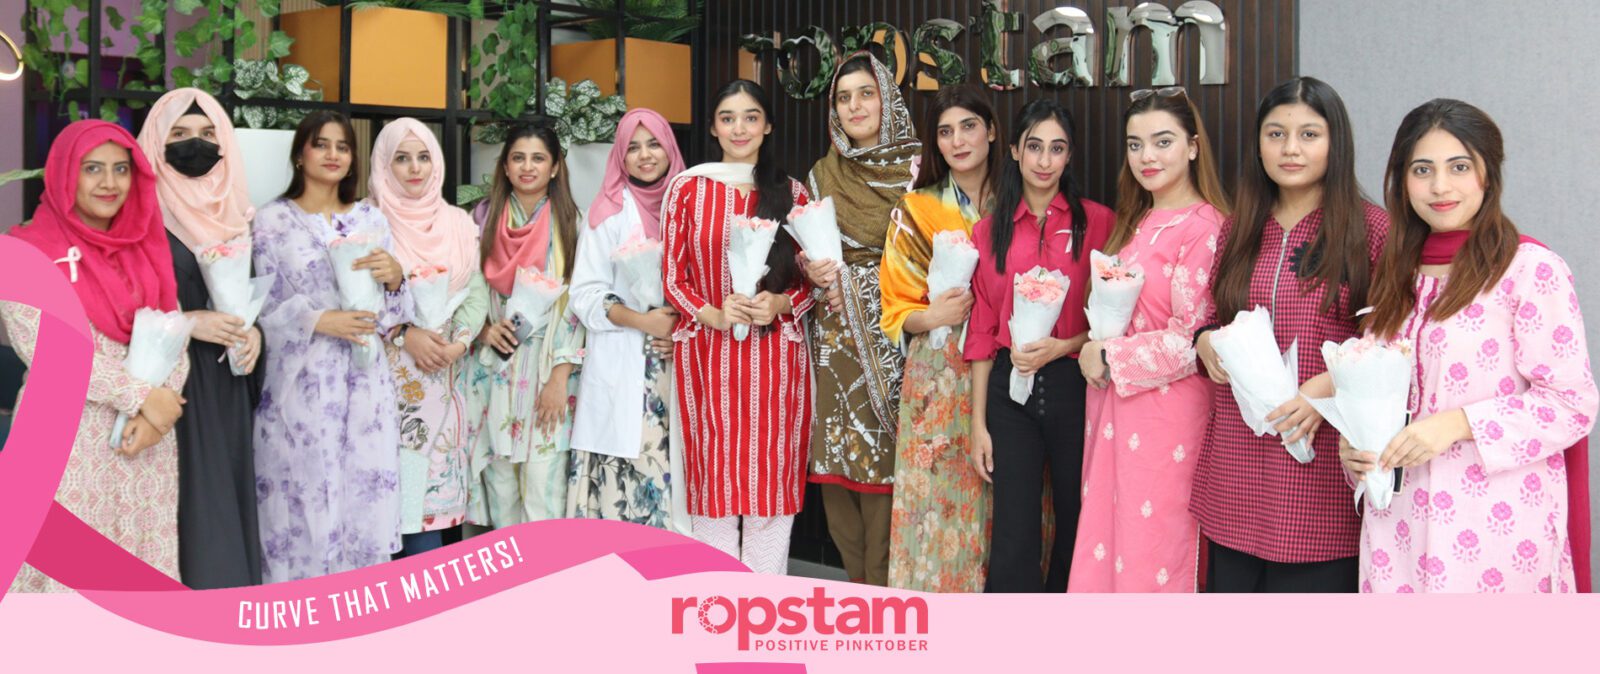 Empowering the ladies of Ropstam